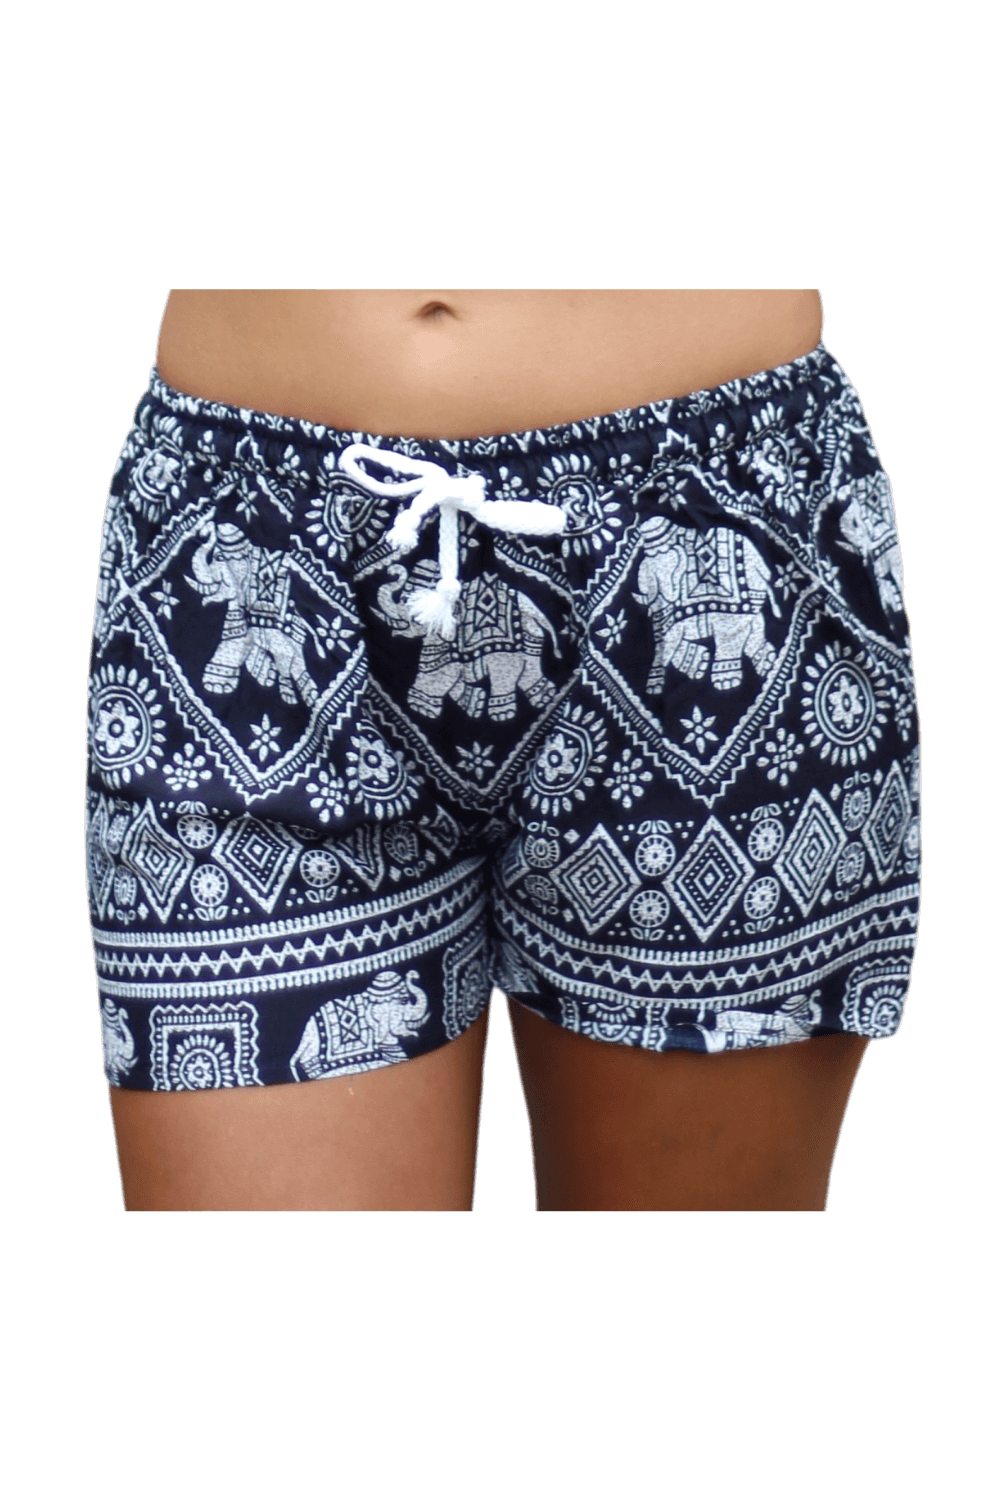 Black Elephant shorts. Cotton clothing from Bohemian Island